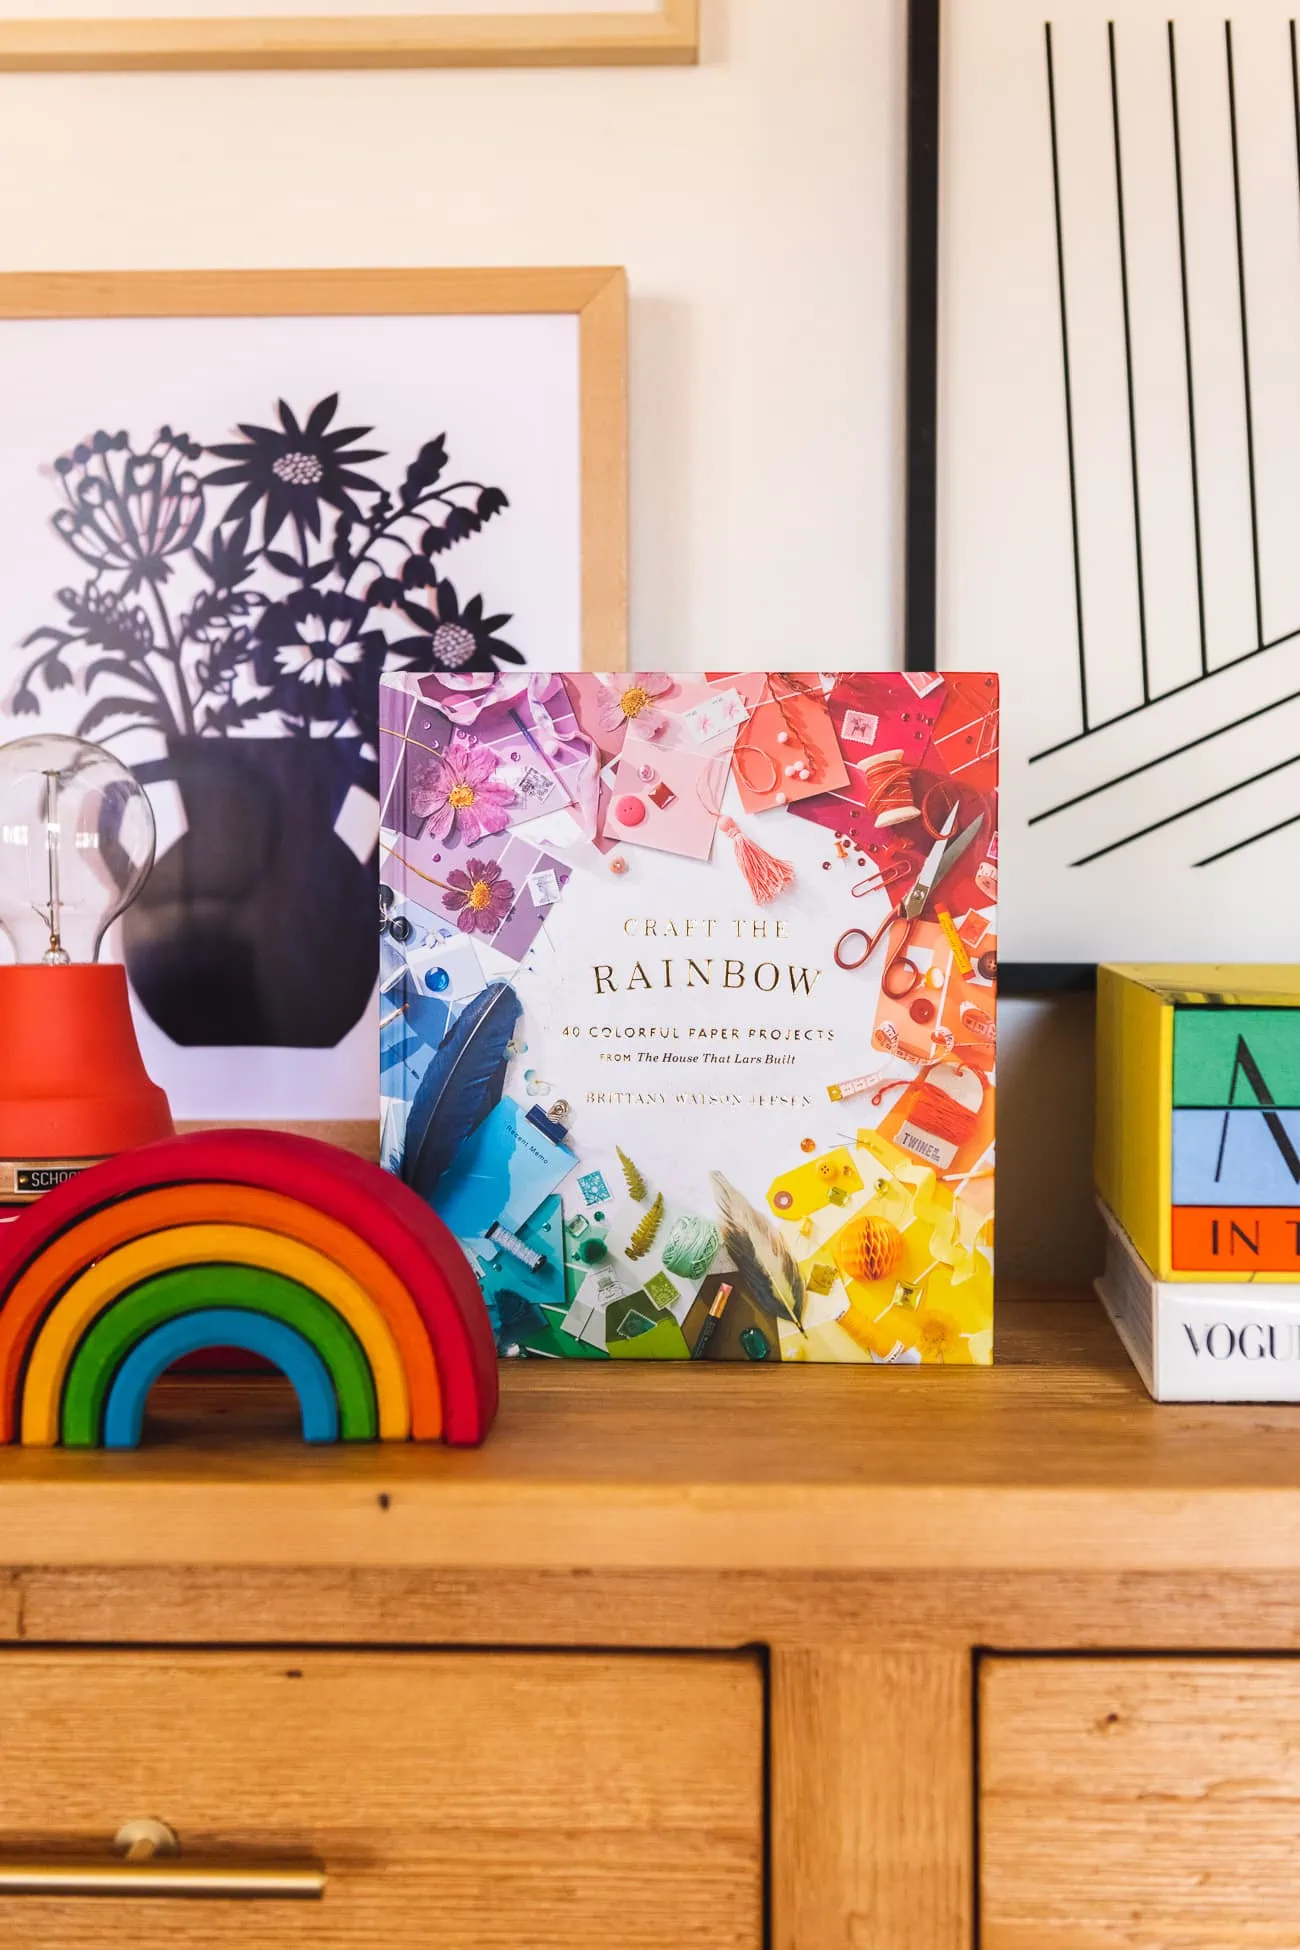 Craft the Rainbow Marketing Photos (9 of 9)